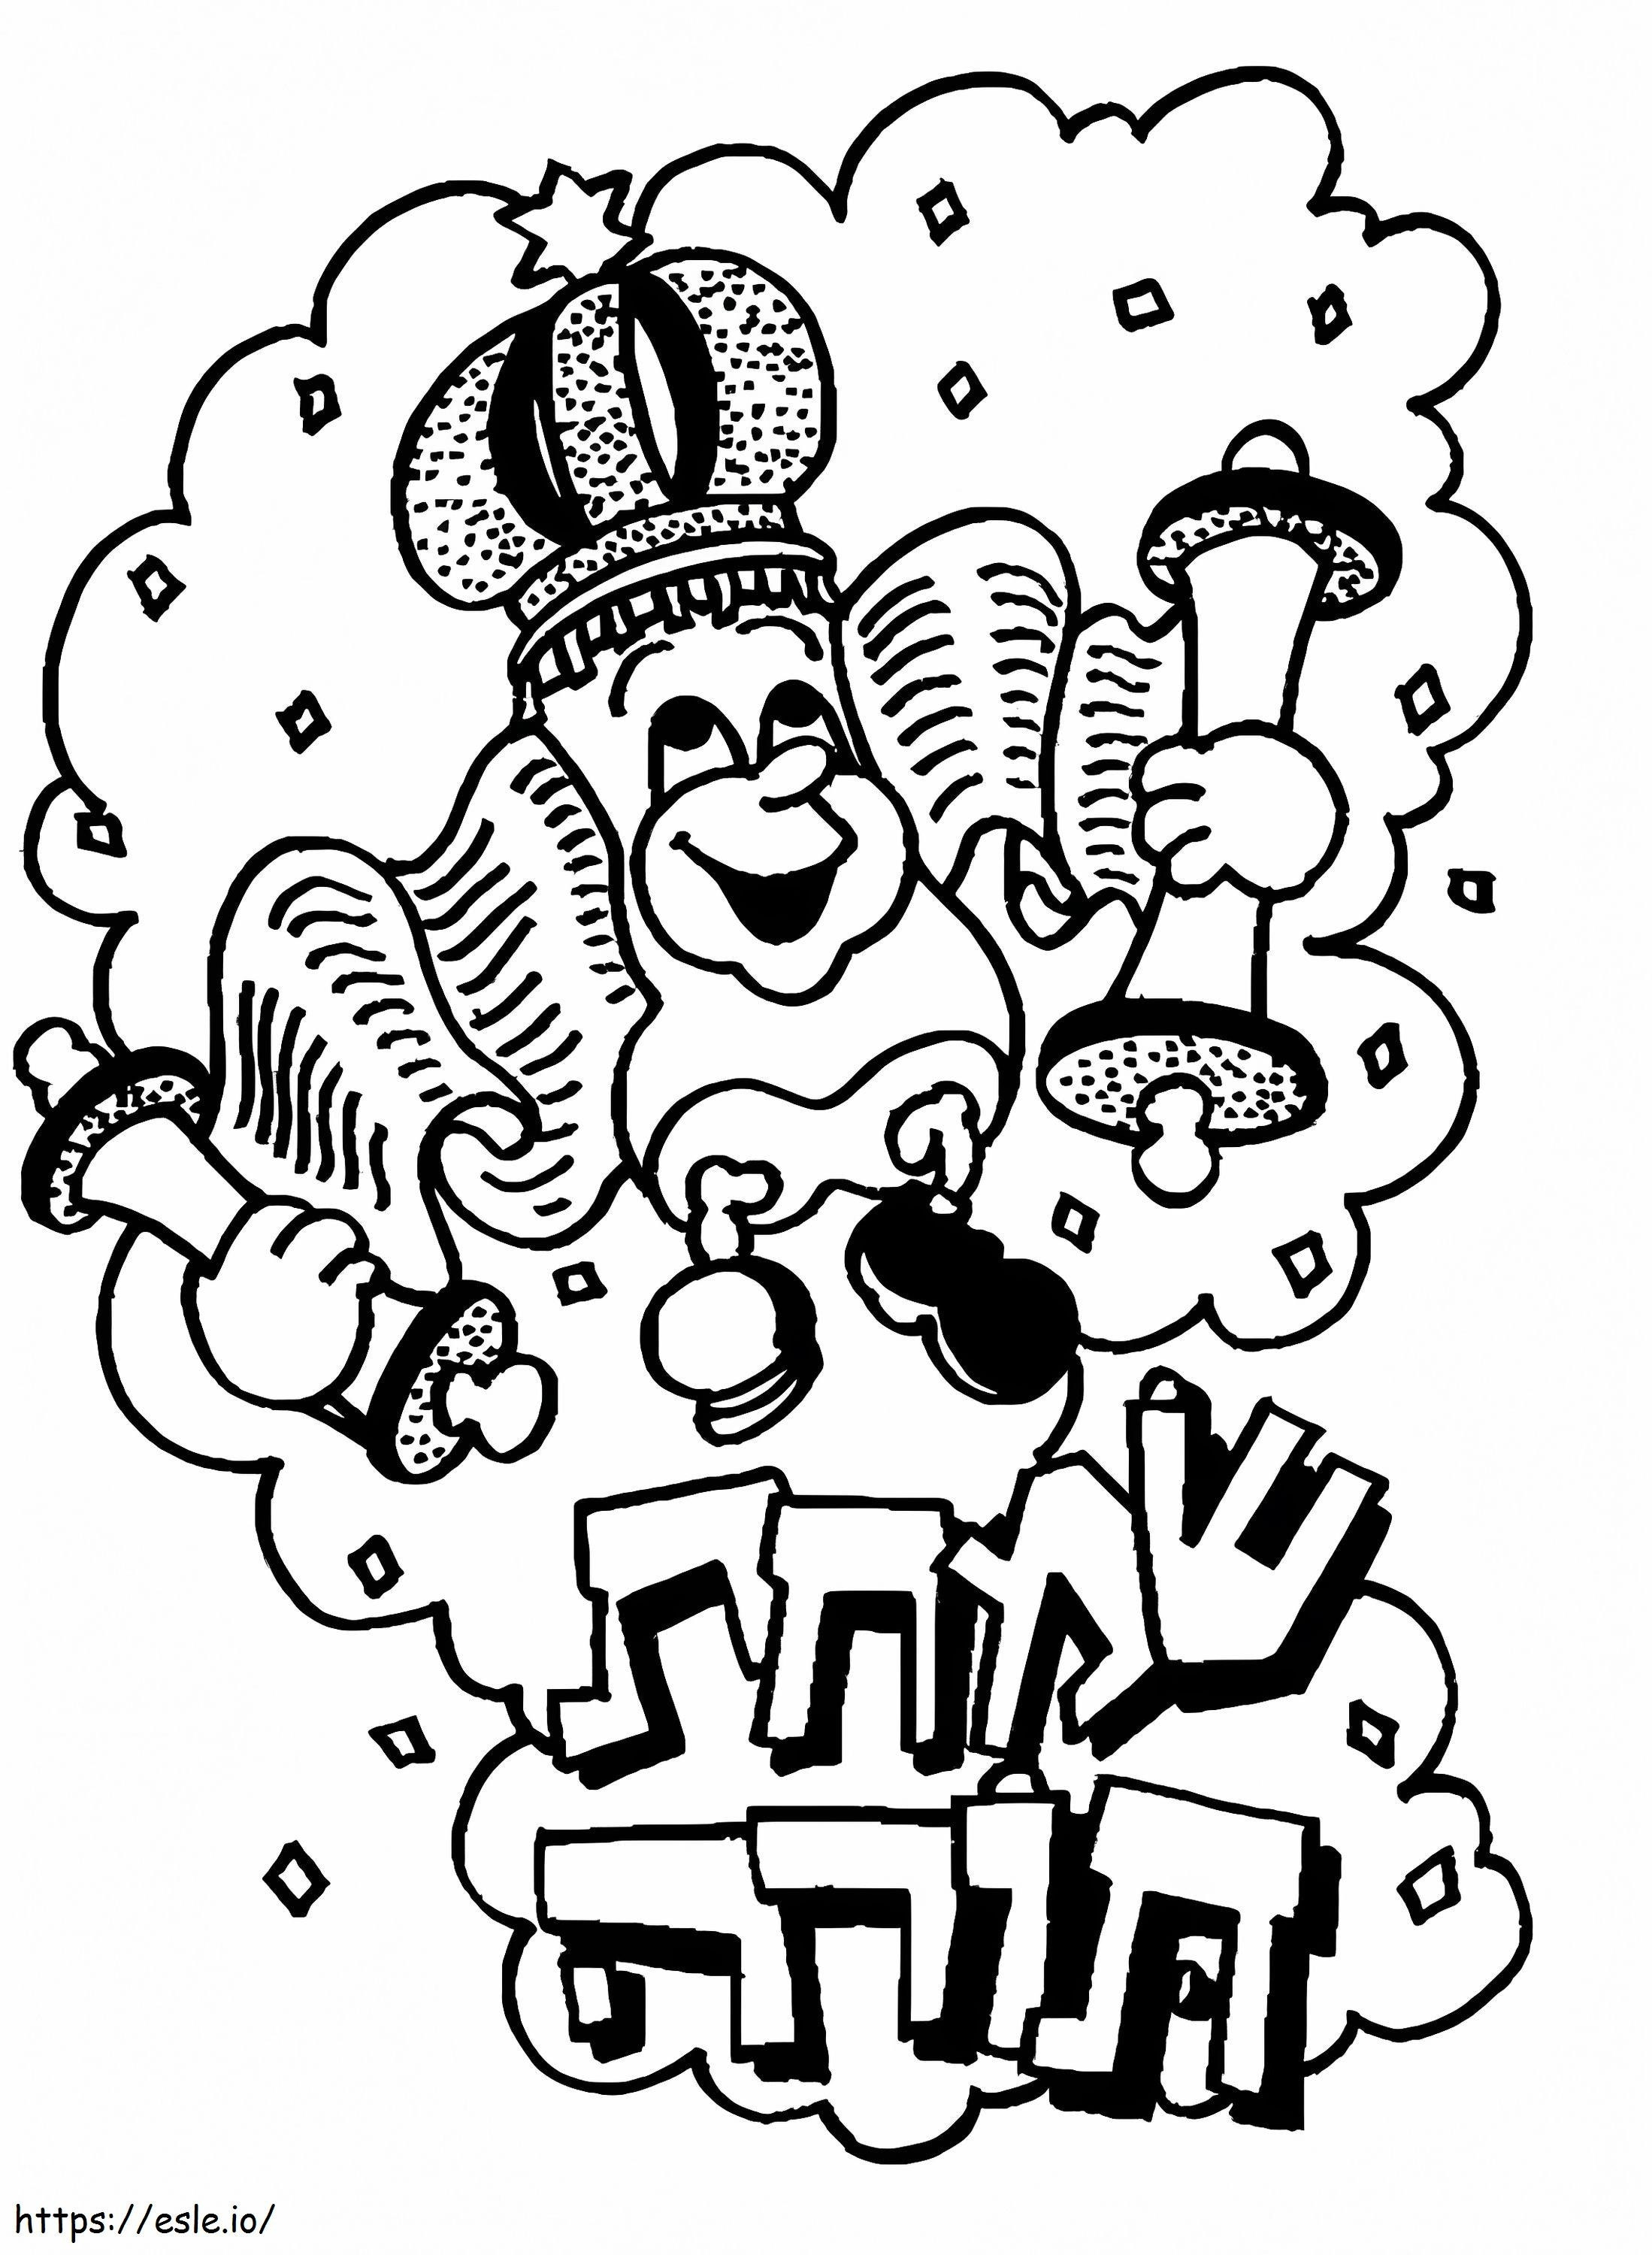 Simchat Torah 10 coloring page